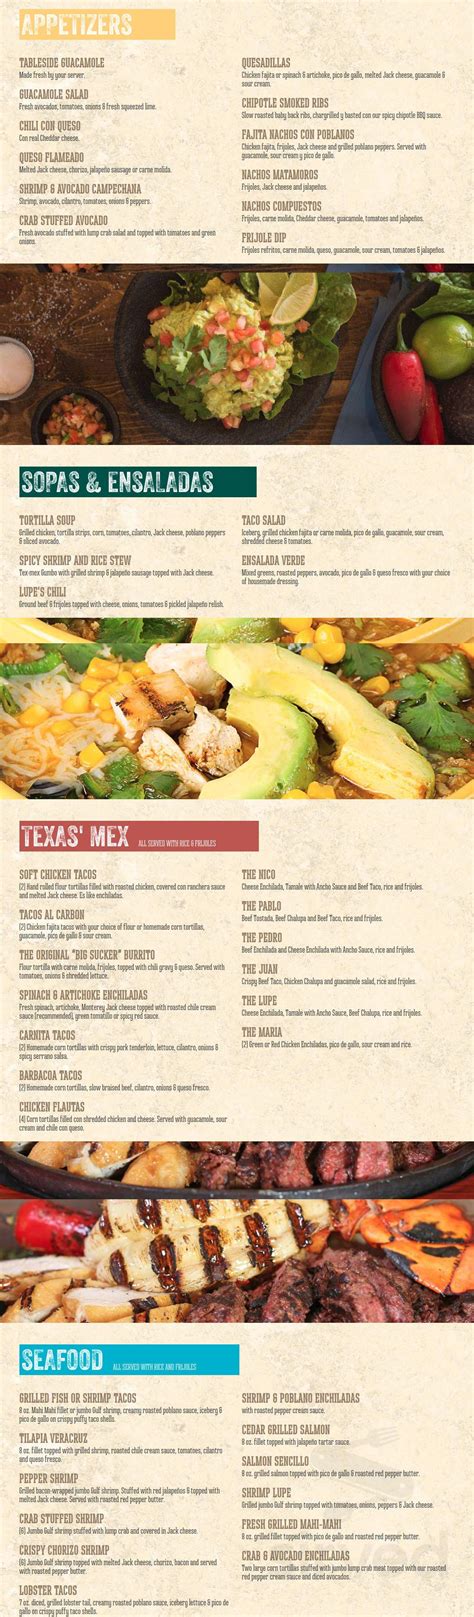 Lupe tortilla mexican restaurant cedar park menu. 33% of 3 votes say it's celiac friendly. 6. Freebirds. 1 rating. 5001 183A Frontage Rd, Cedar Park, TX 78613. $ • Quick Service Restaurant. GF Menu. 